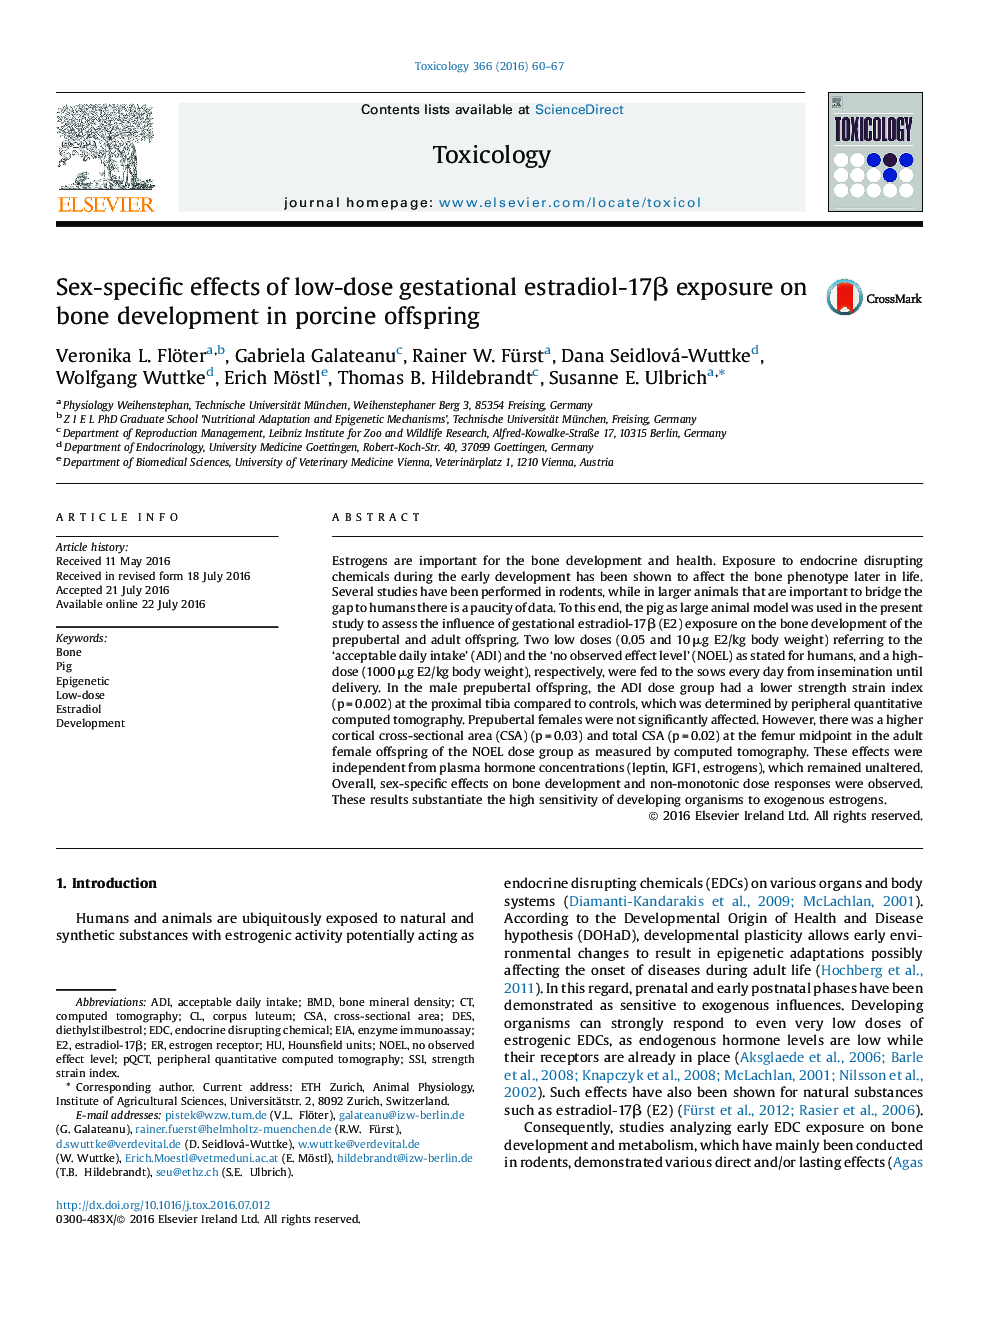 Sex-specific effects of low-dose gestational estradiol-17β exposure on bone development in porcine offspring